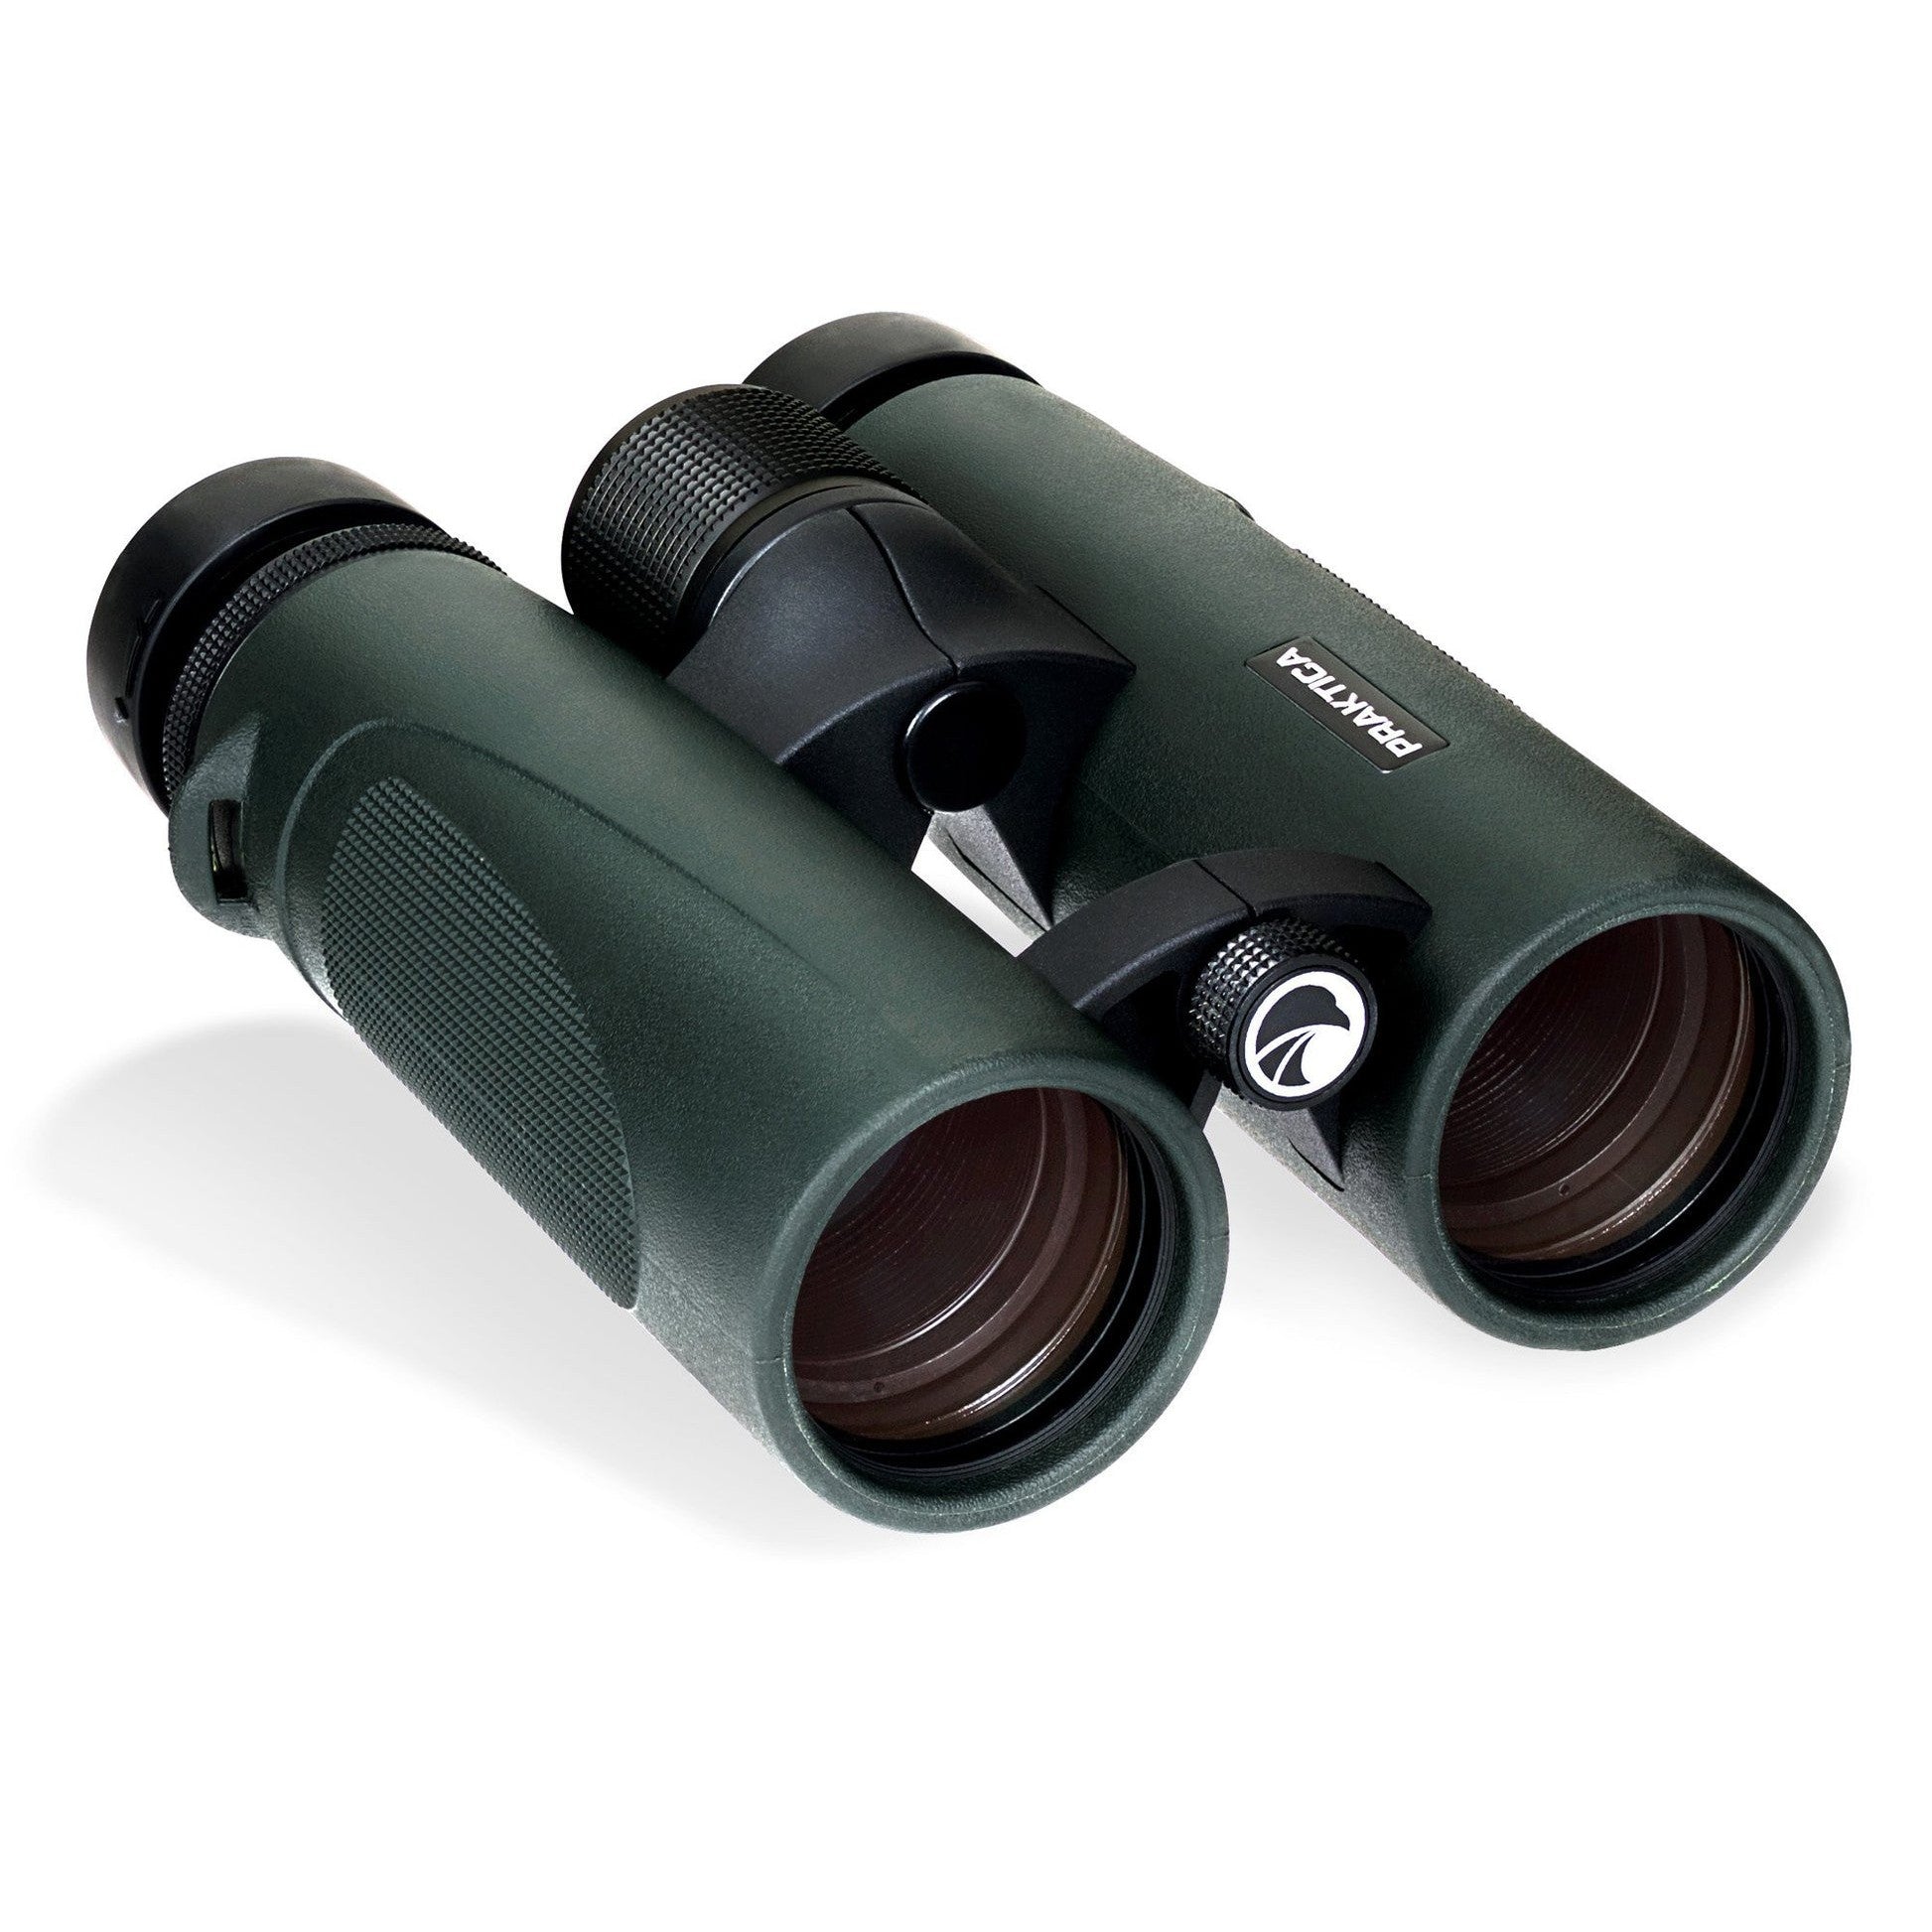 PRAKTICA Ambassador ED 8x42mm Binoculars - Green